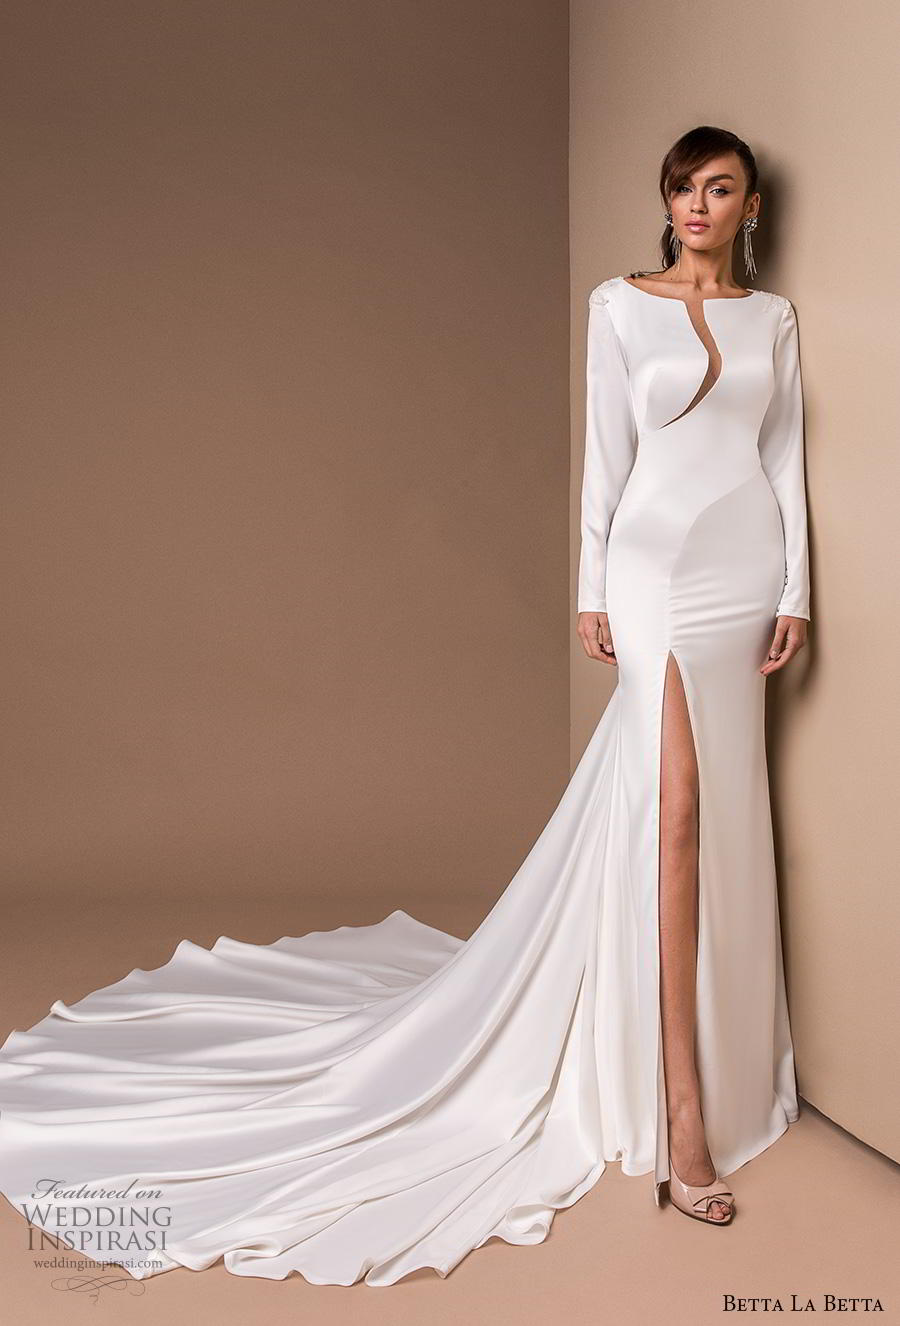 betta la betta 2020 bridal long sleeves bateau neckline simple minimalist slit skirt elegant sheath wedding dress sheer lace back chapel train (5) mv